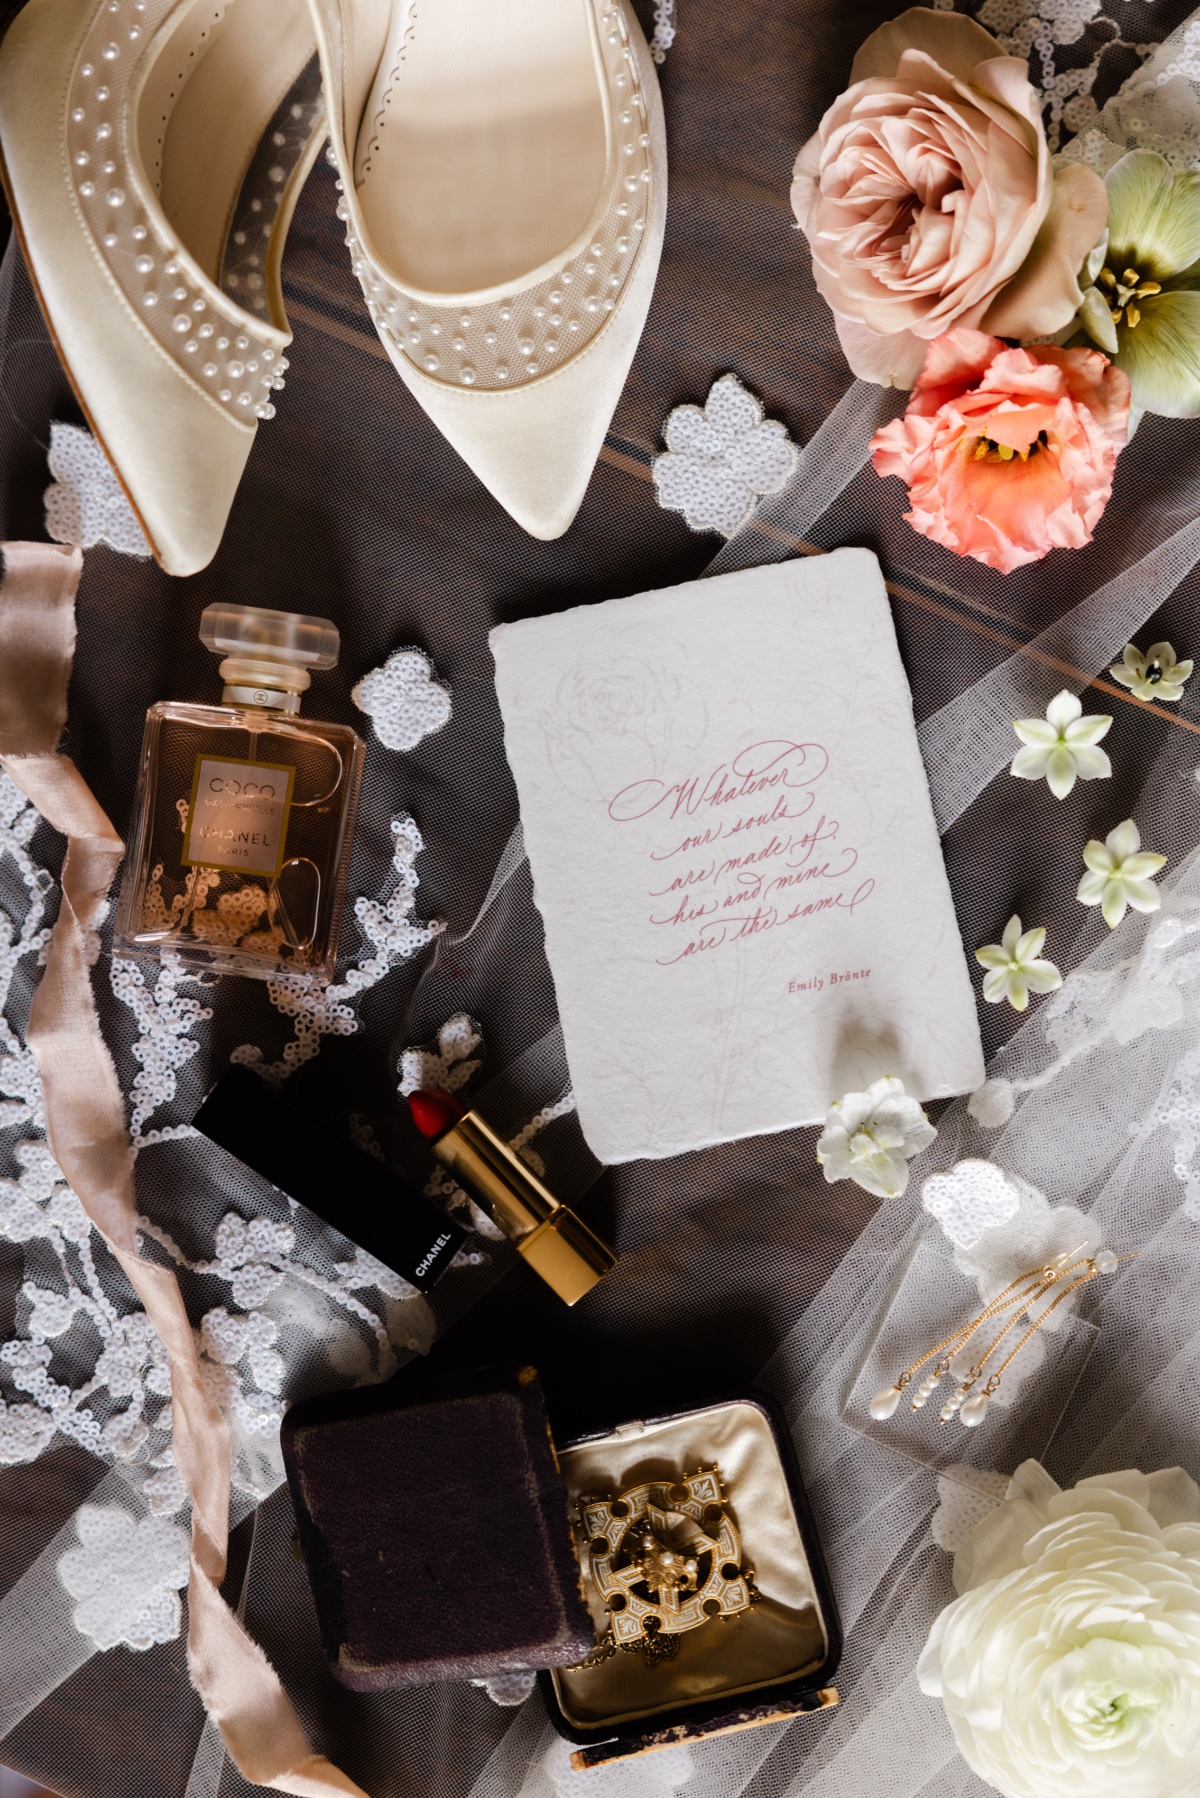 Elegant French wedding invitations with eco friendly flowers